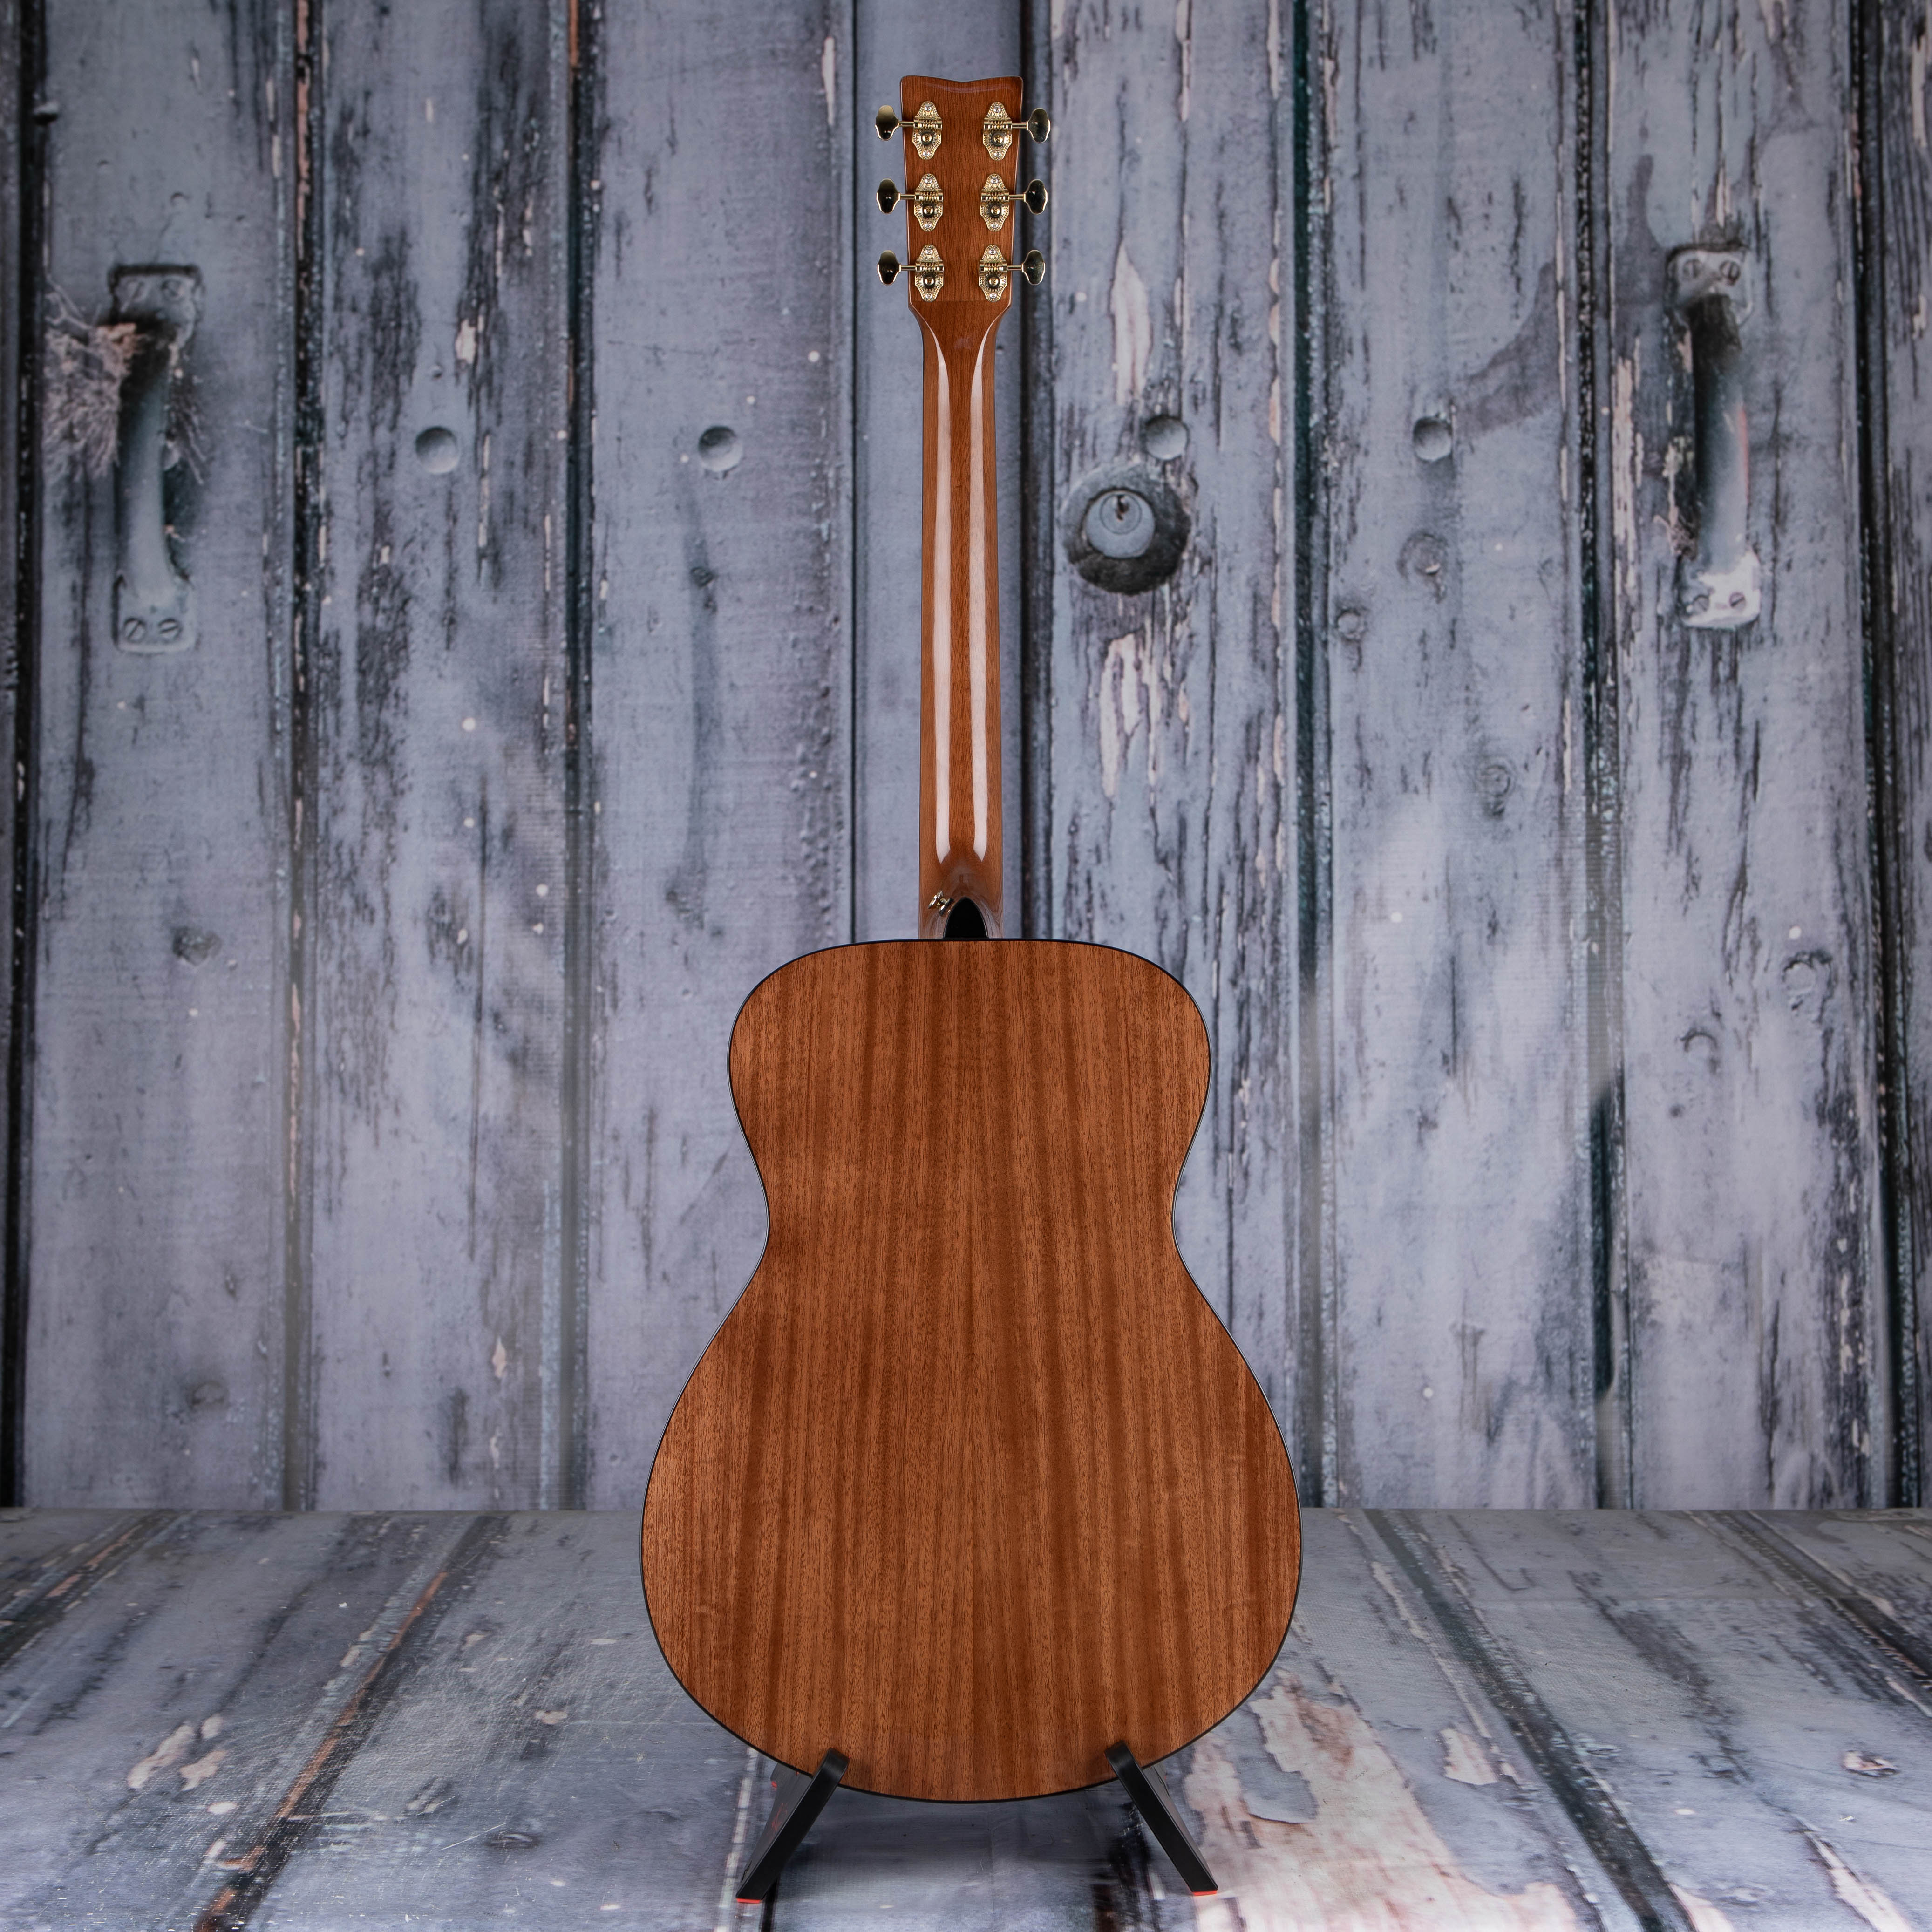 Yamaha Storia III Acoustic/Electric Guitar, Chocolate Brown, back